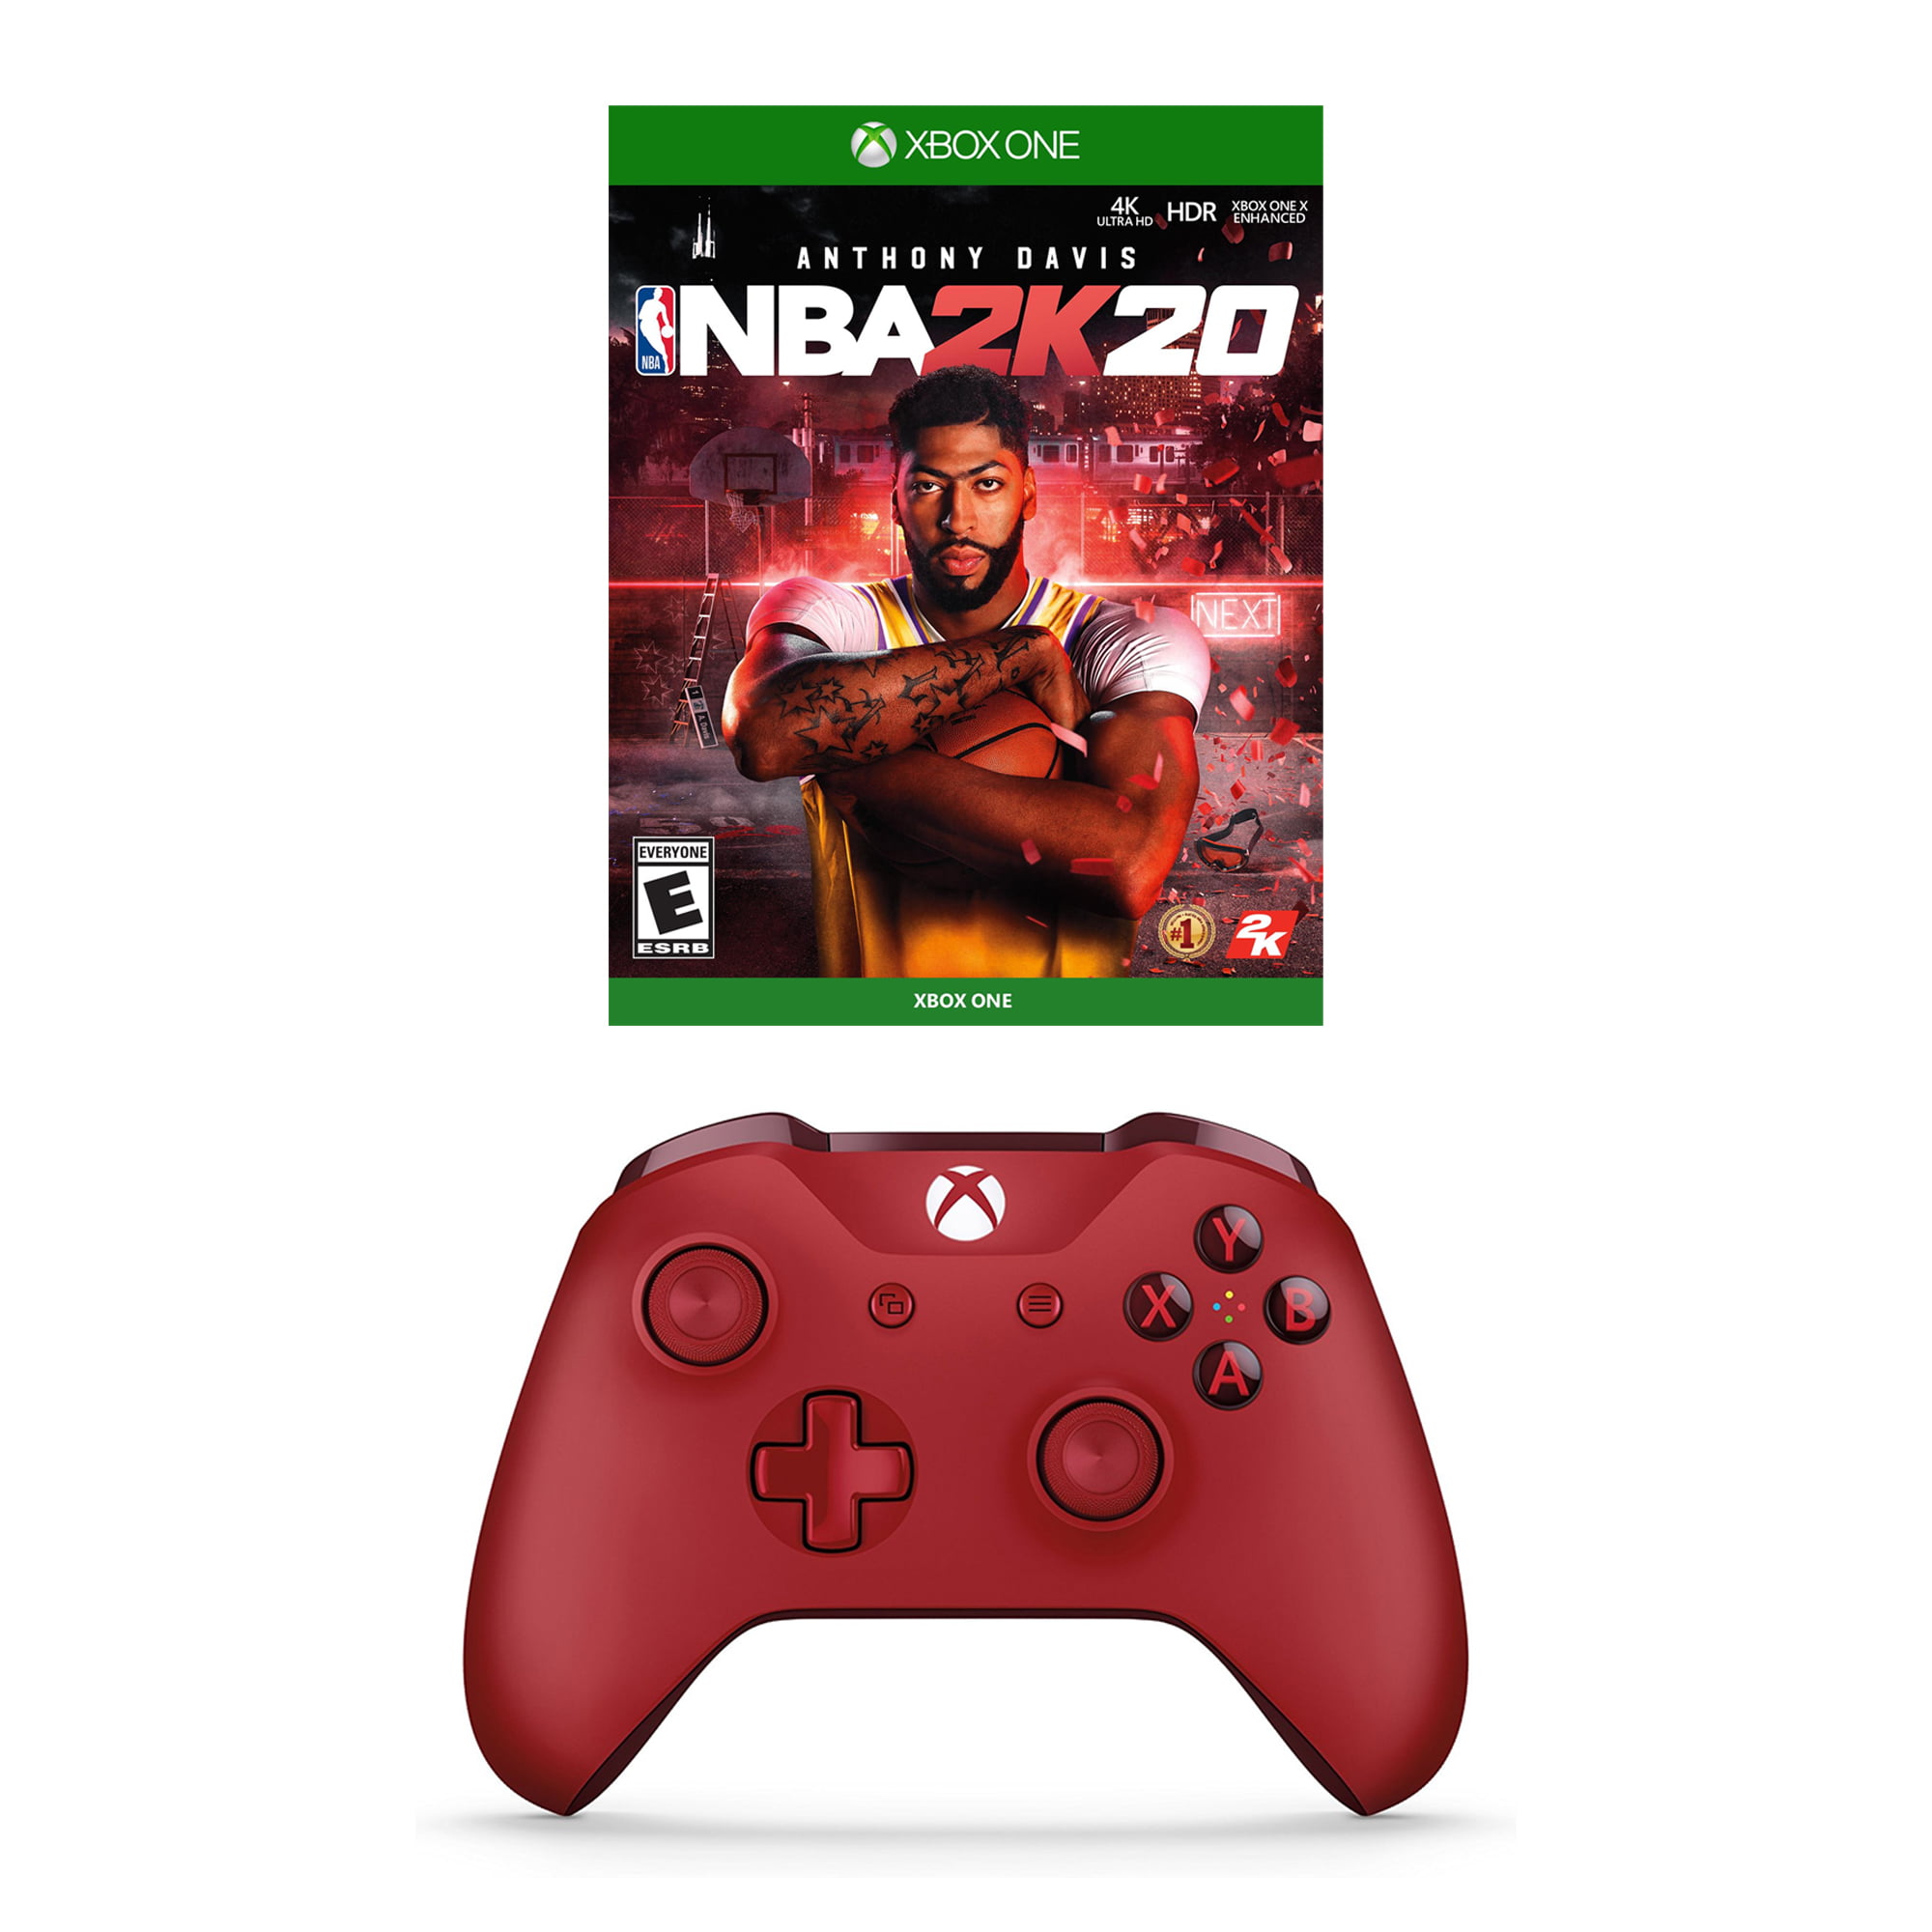 Игра на xbox one red. Геймпад к 20 летию Xbox. Хбокс 1 красный. Microsoft Xbox one Controller 2018 года. MSI g20 геймпад.